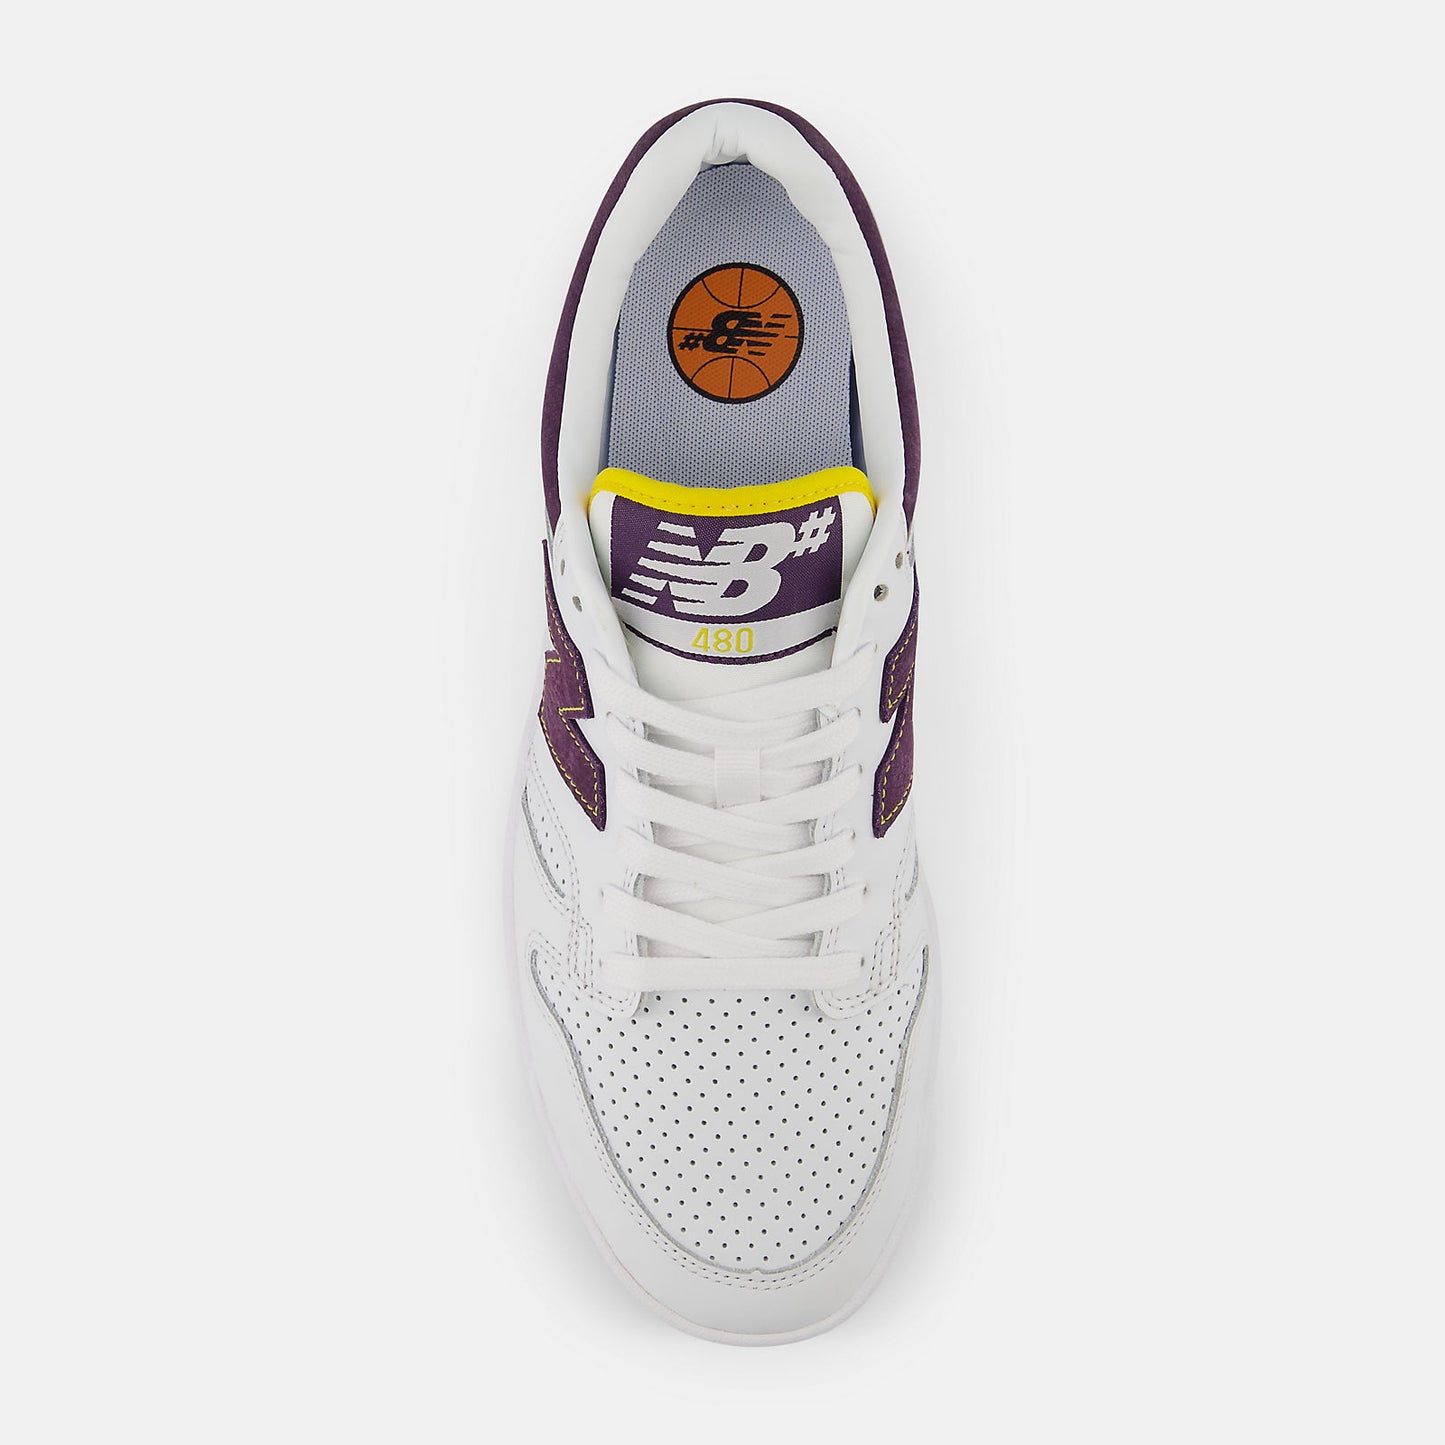 New Balance 480 83 Remixed Skate Shoes - White/Purple/Gold